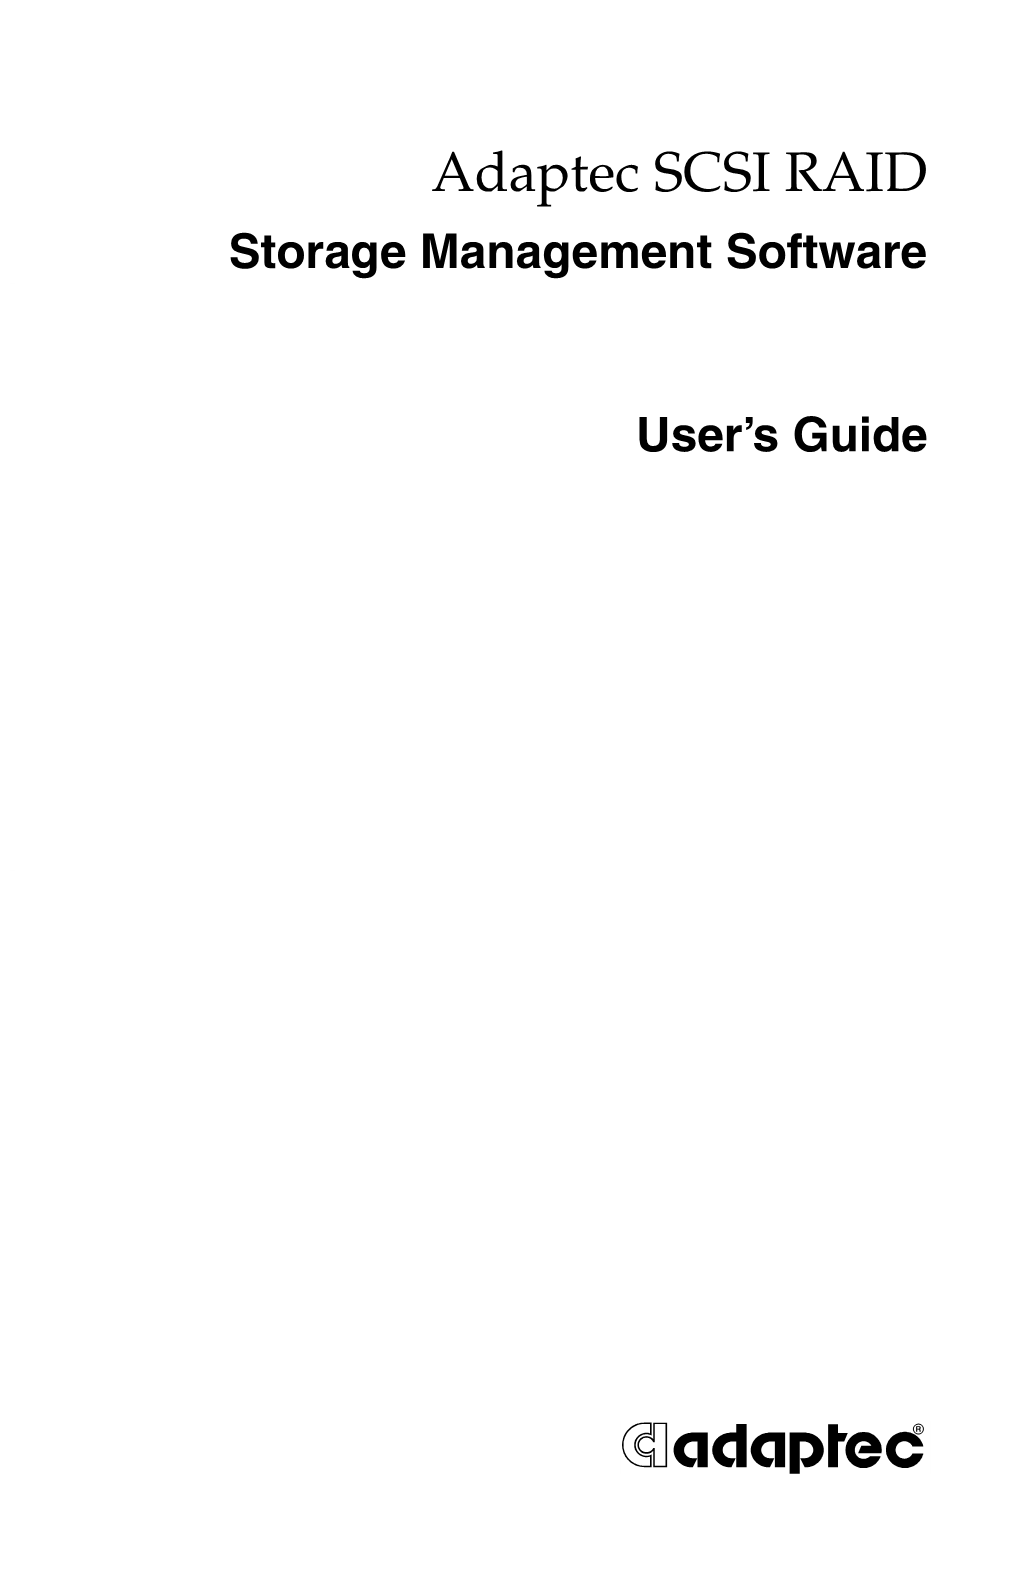 Storage Management Software User's Guide